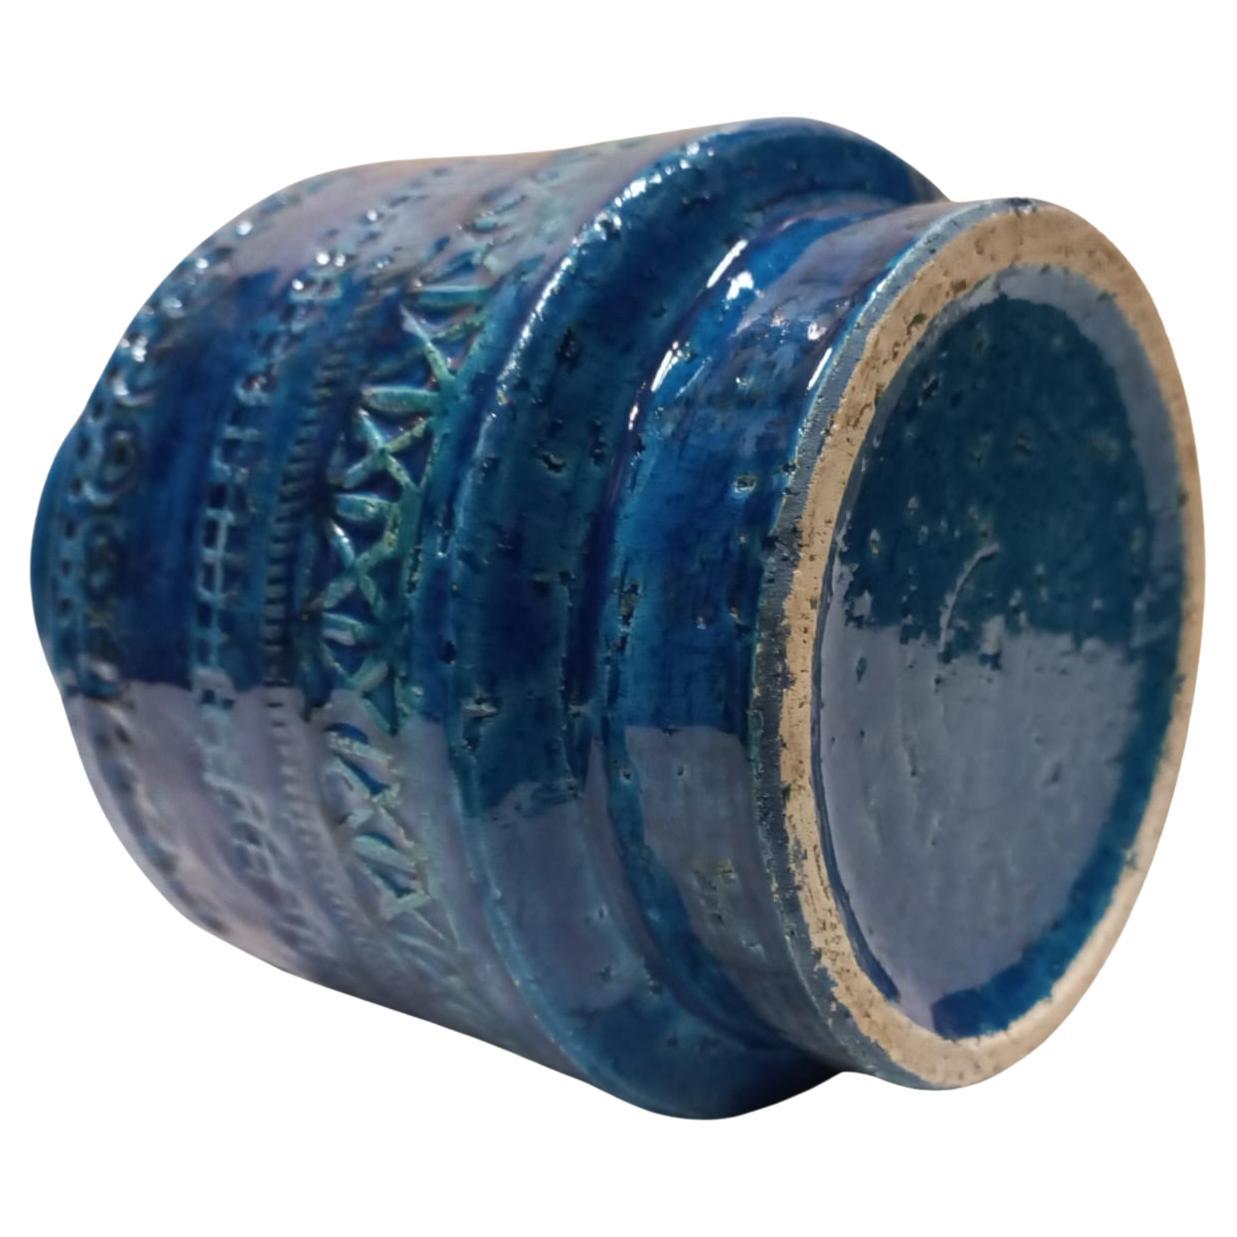 Aldo Londi Circular Ceramic Vase, Blue Glazed, Bitossi, Mid 20th Century 1